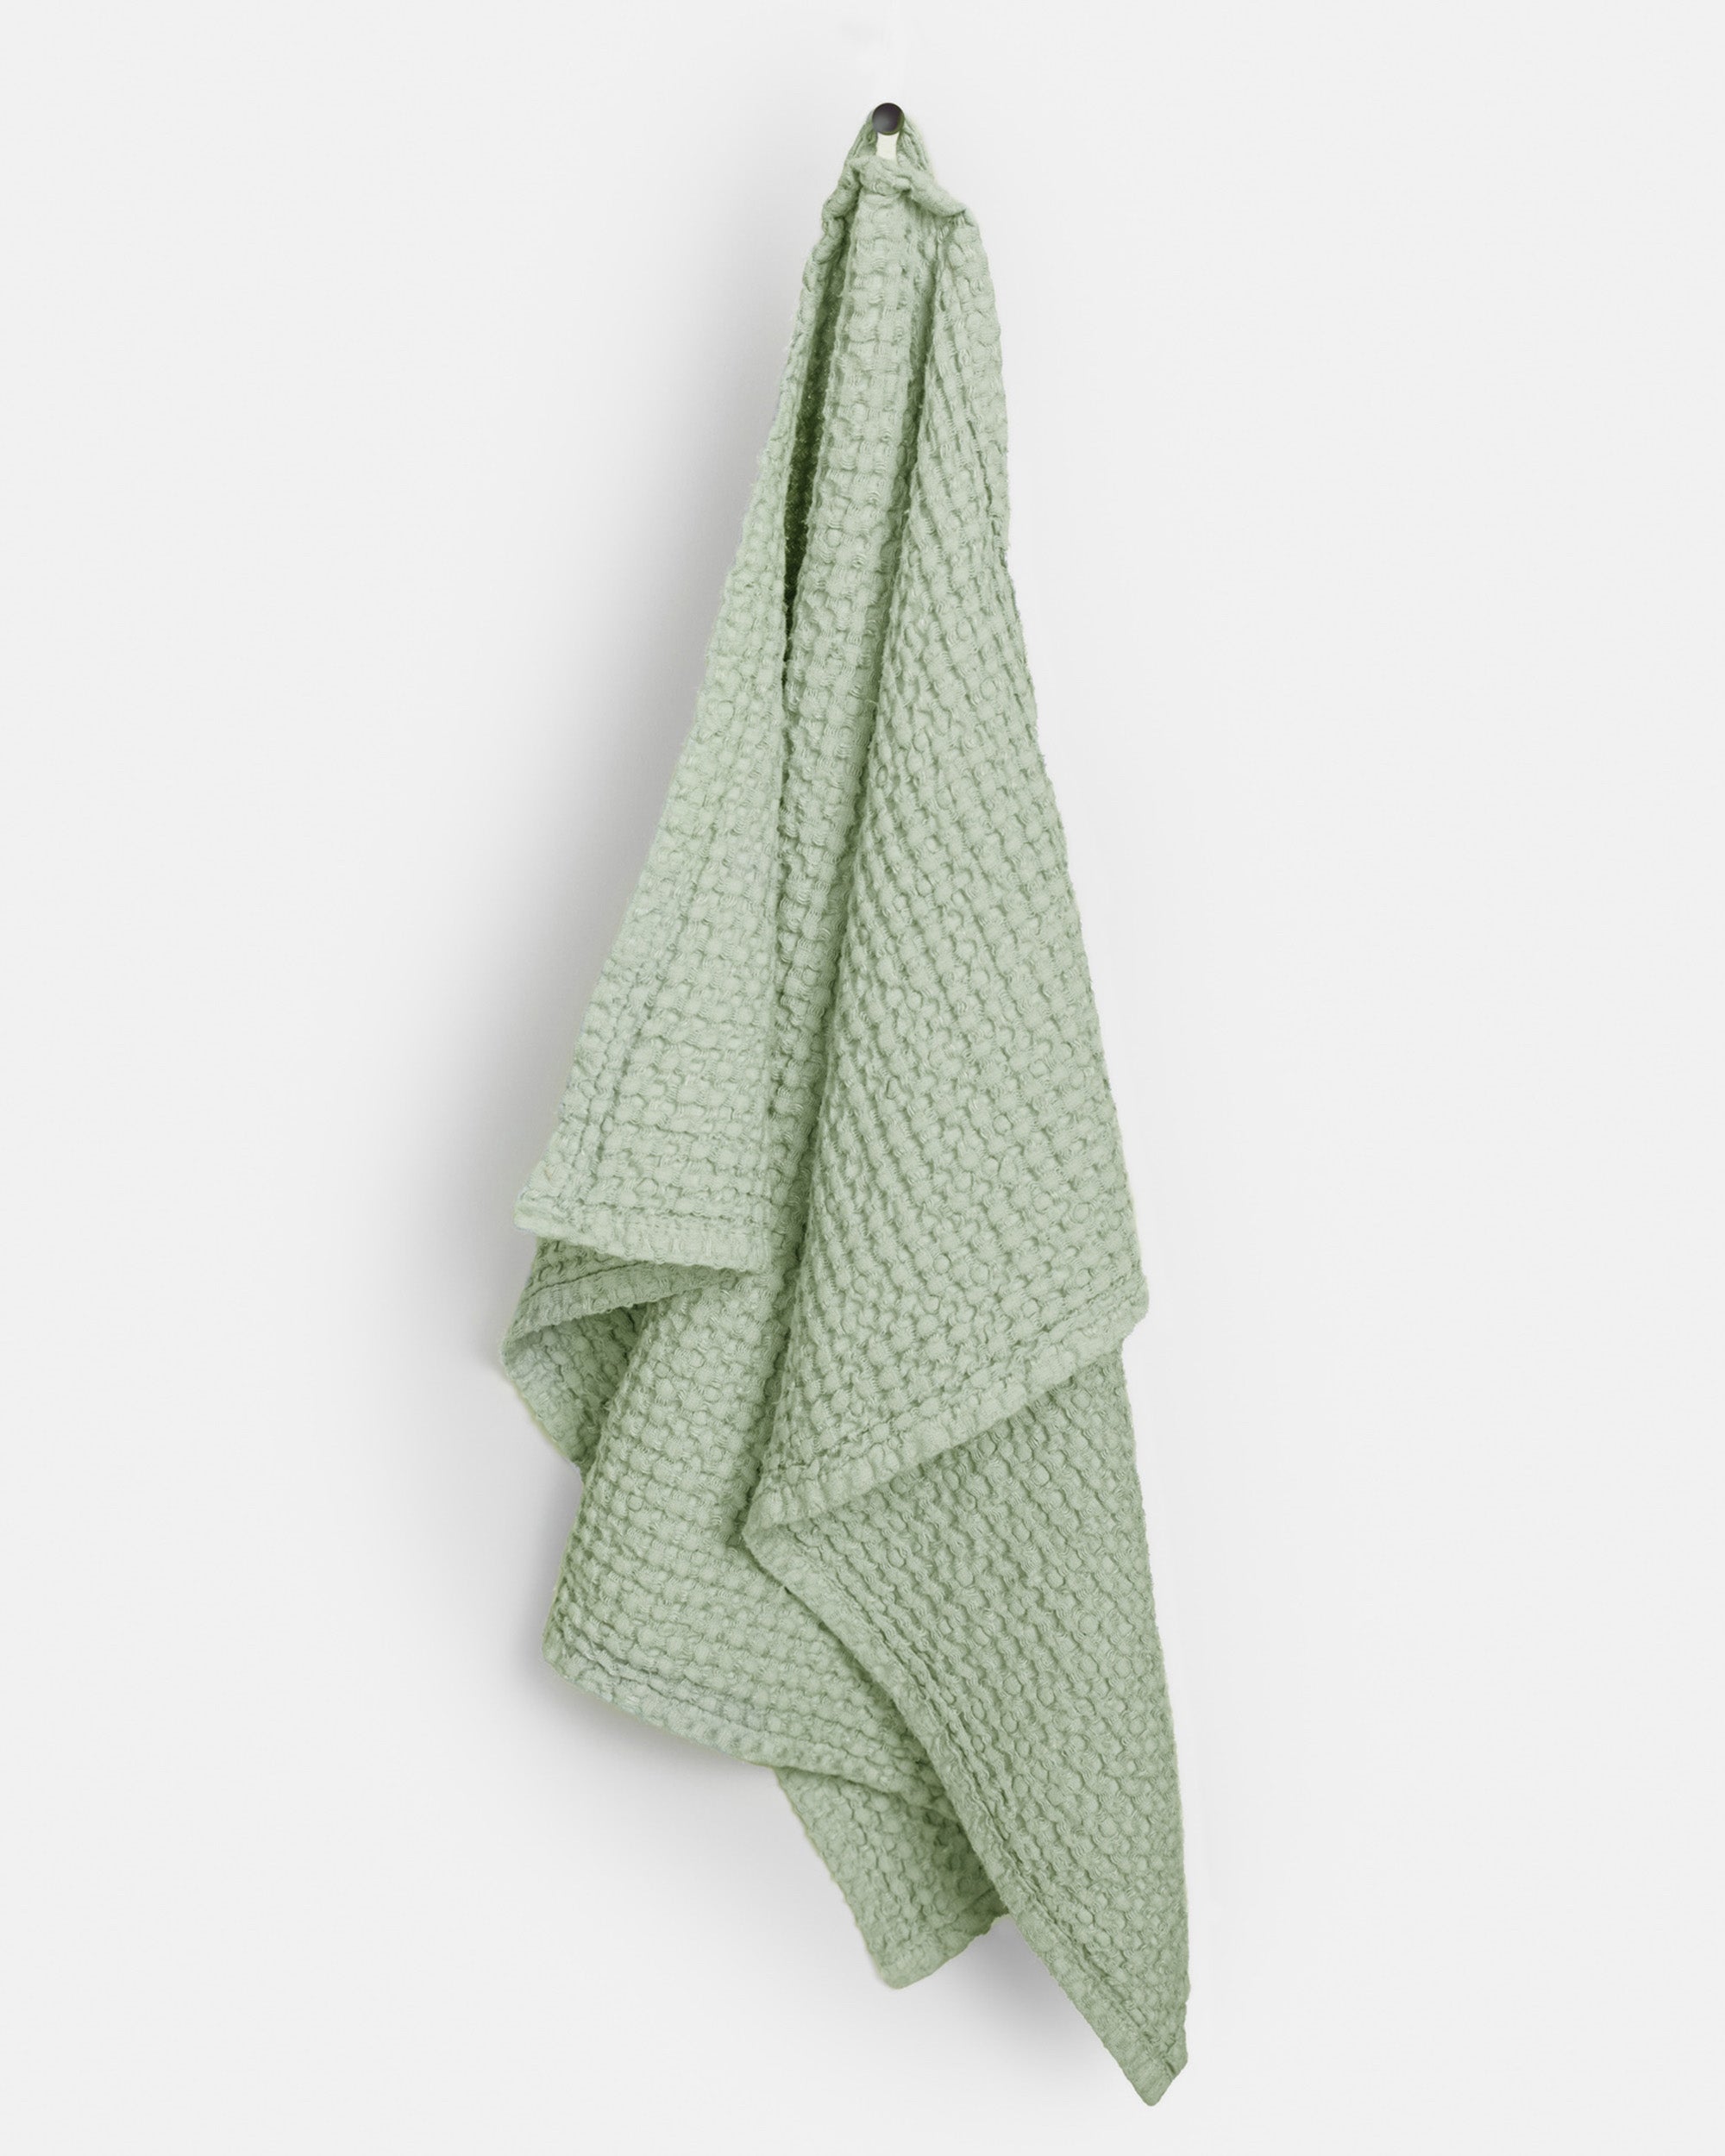 Hanging Dish Towels Green